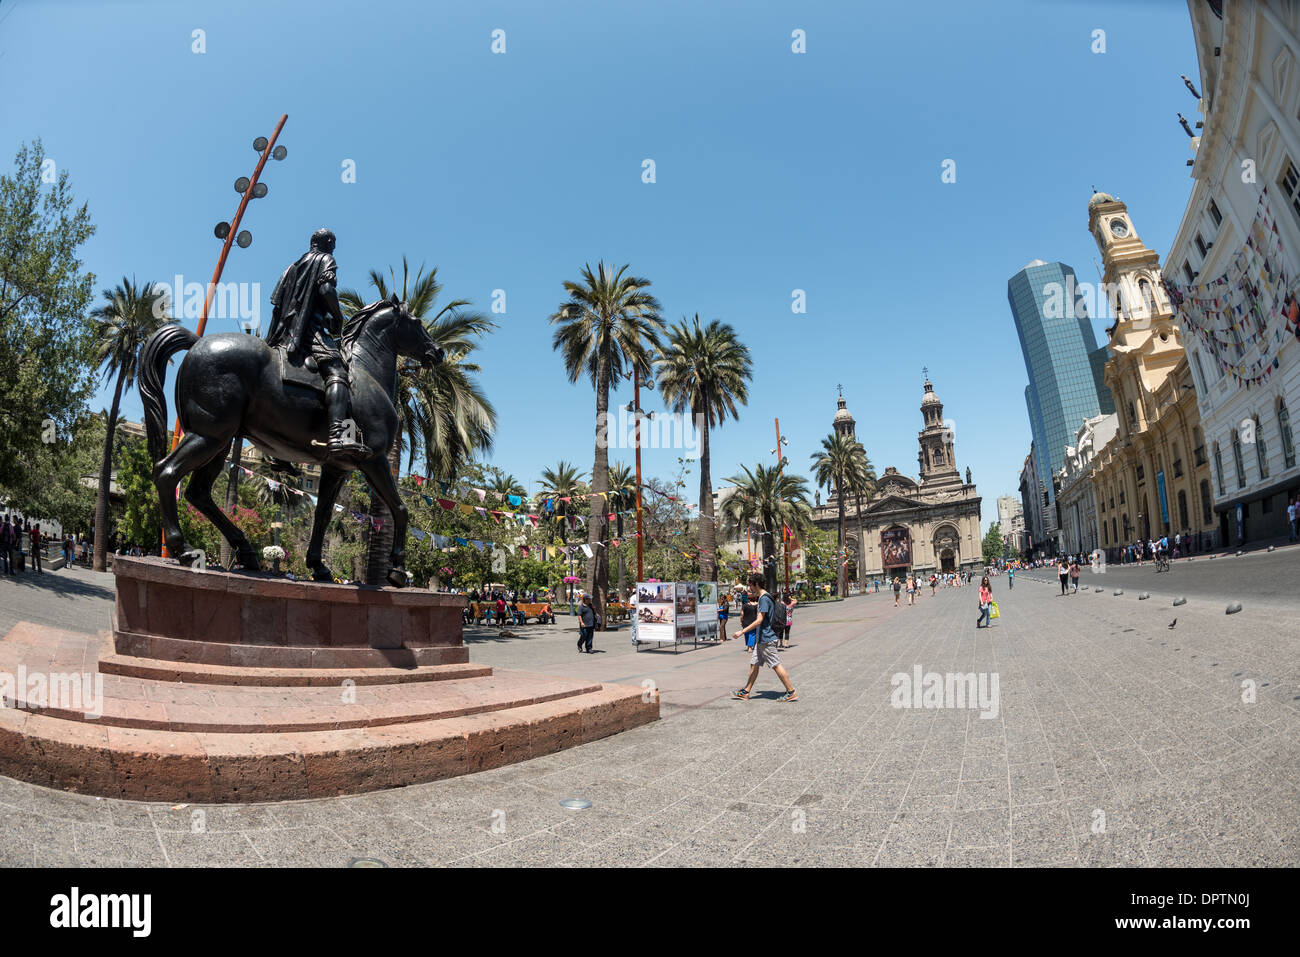 SANTIAGO, Chile - An equestian statue of Valdivia, the Spanish conquistador who founded Santiago in 1541, in Plaza de Armas in the center of Santiago de Chile. Stock Photo